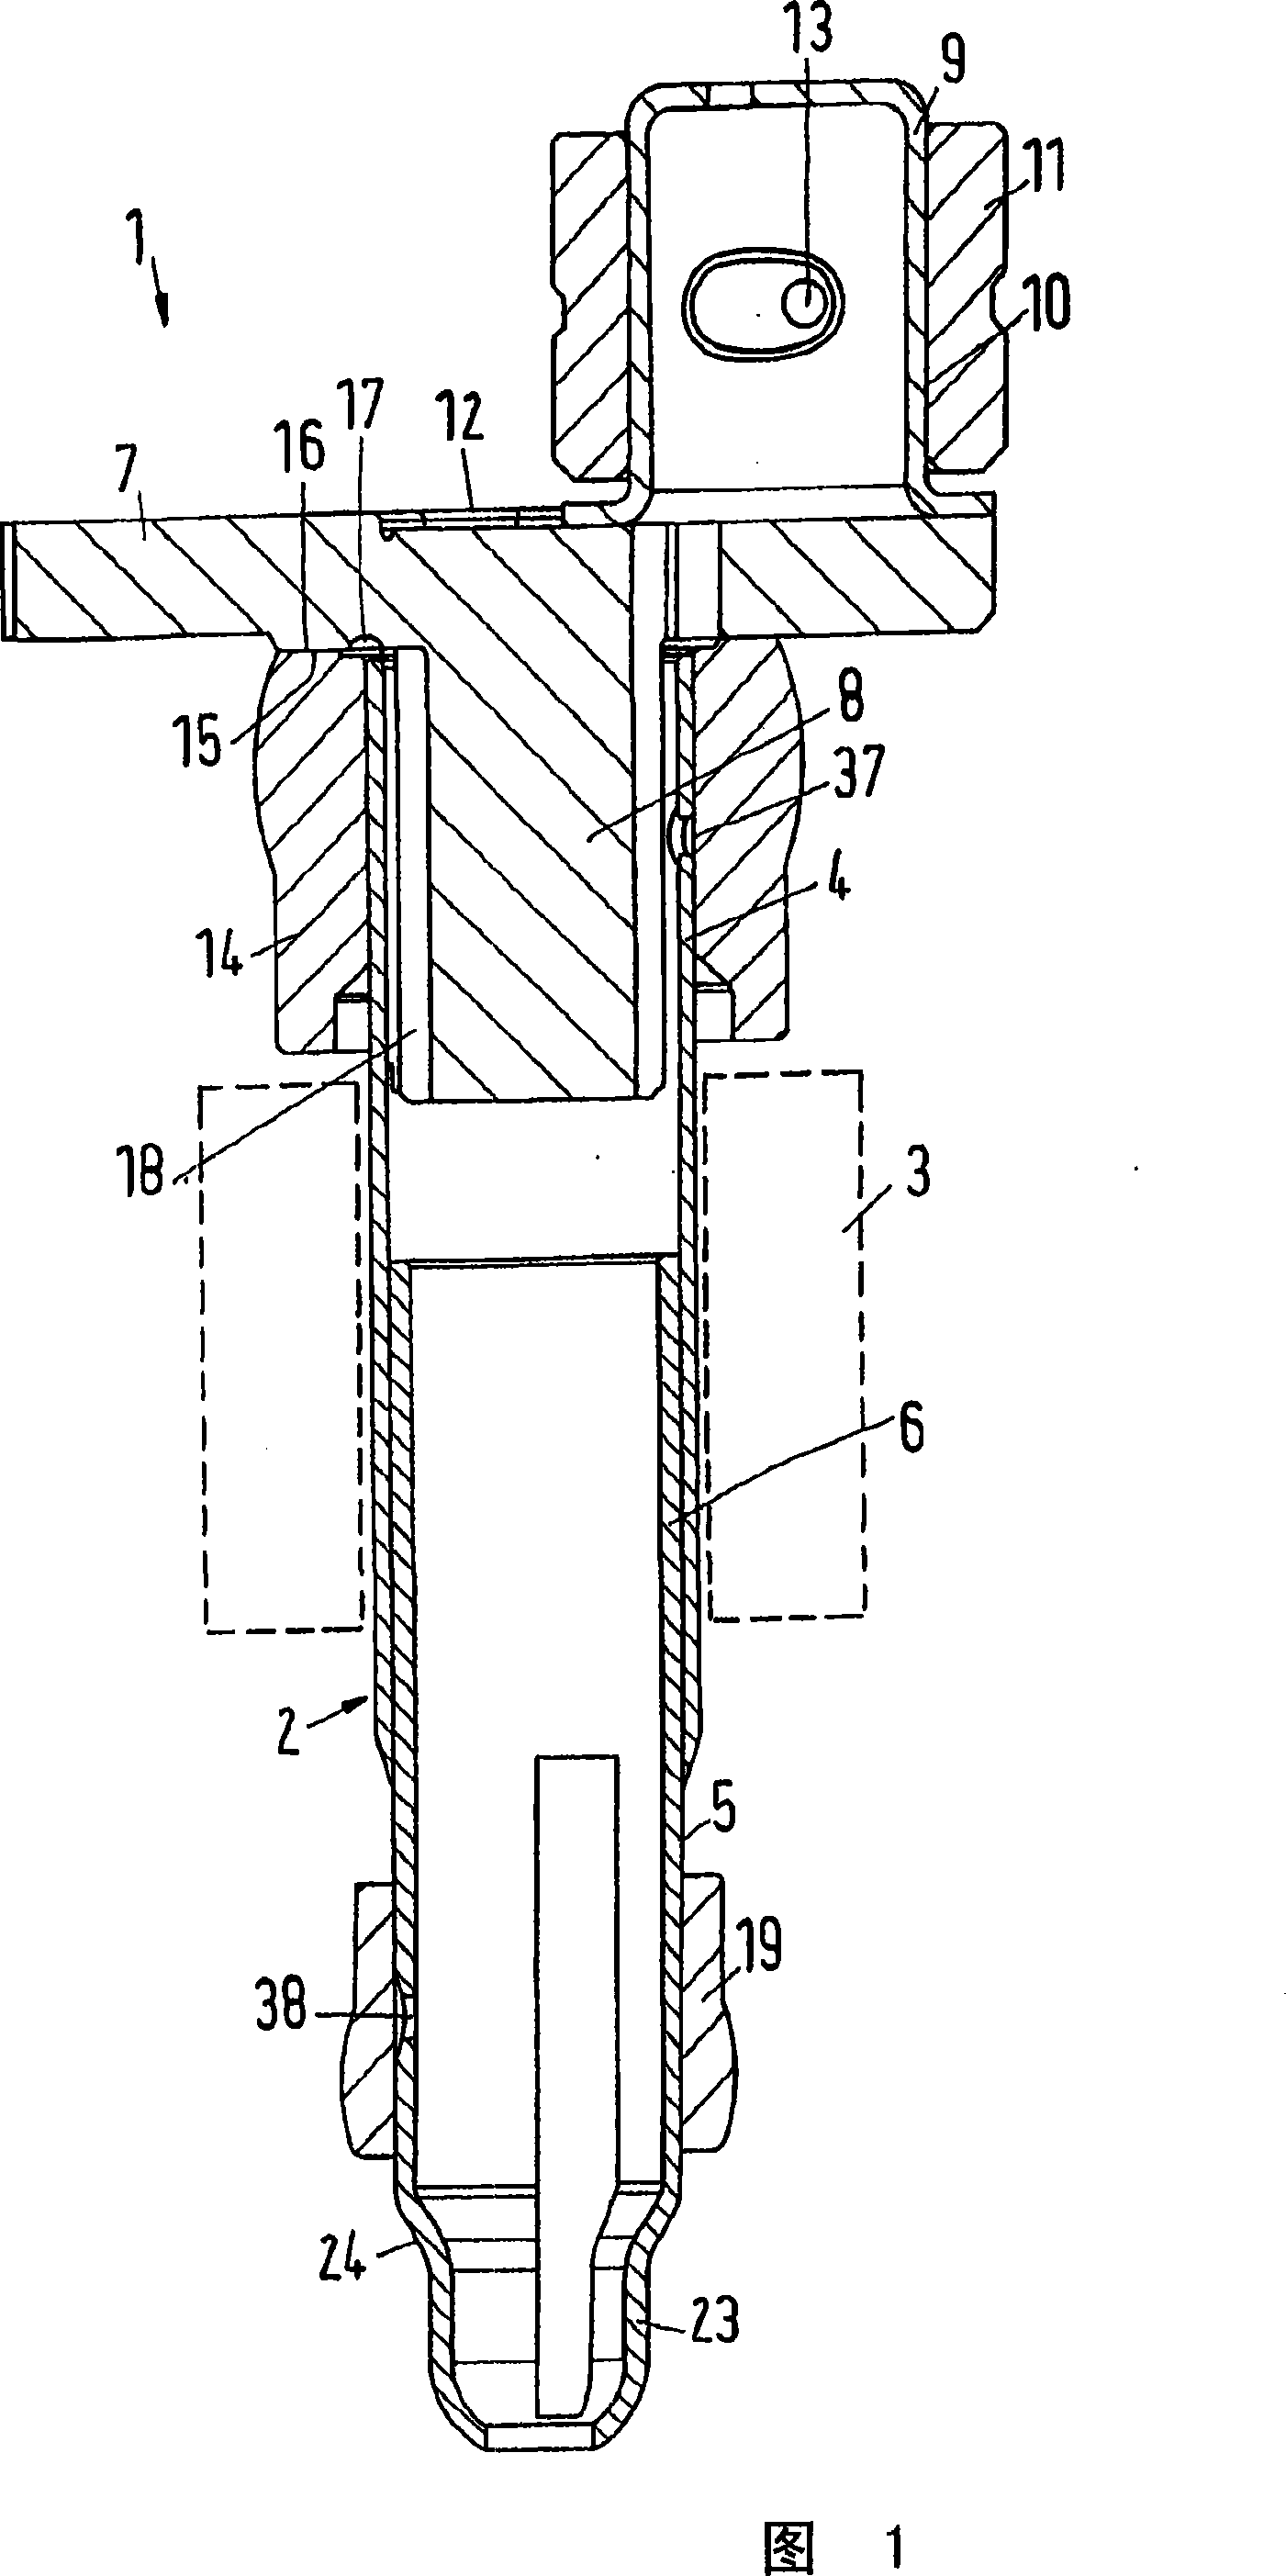 Compressor crankshaft, particularly refrigerant compressor crankshaft, and method for grinding such a crankshaft